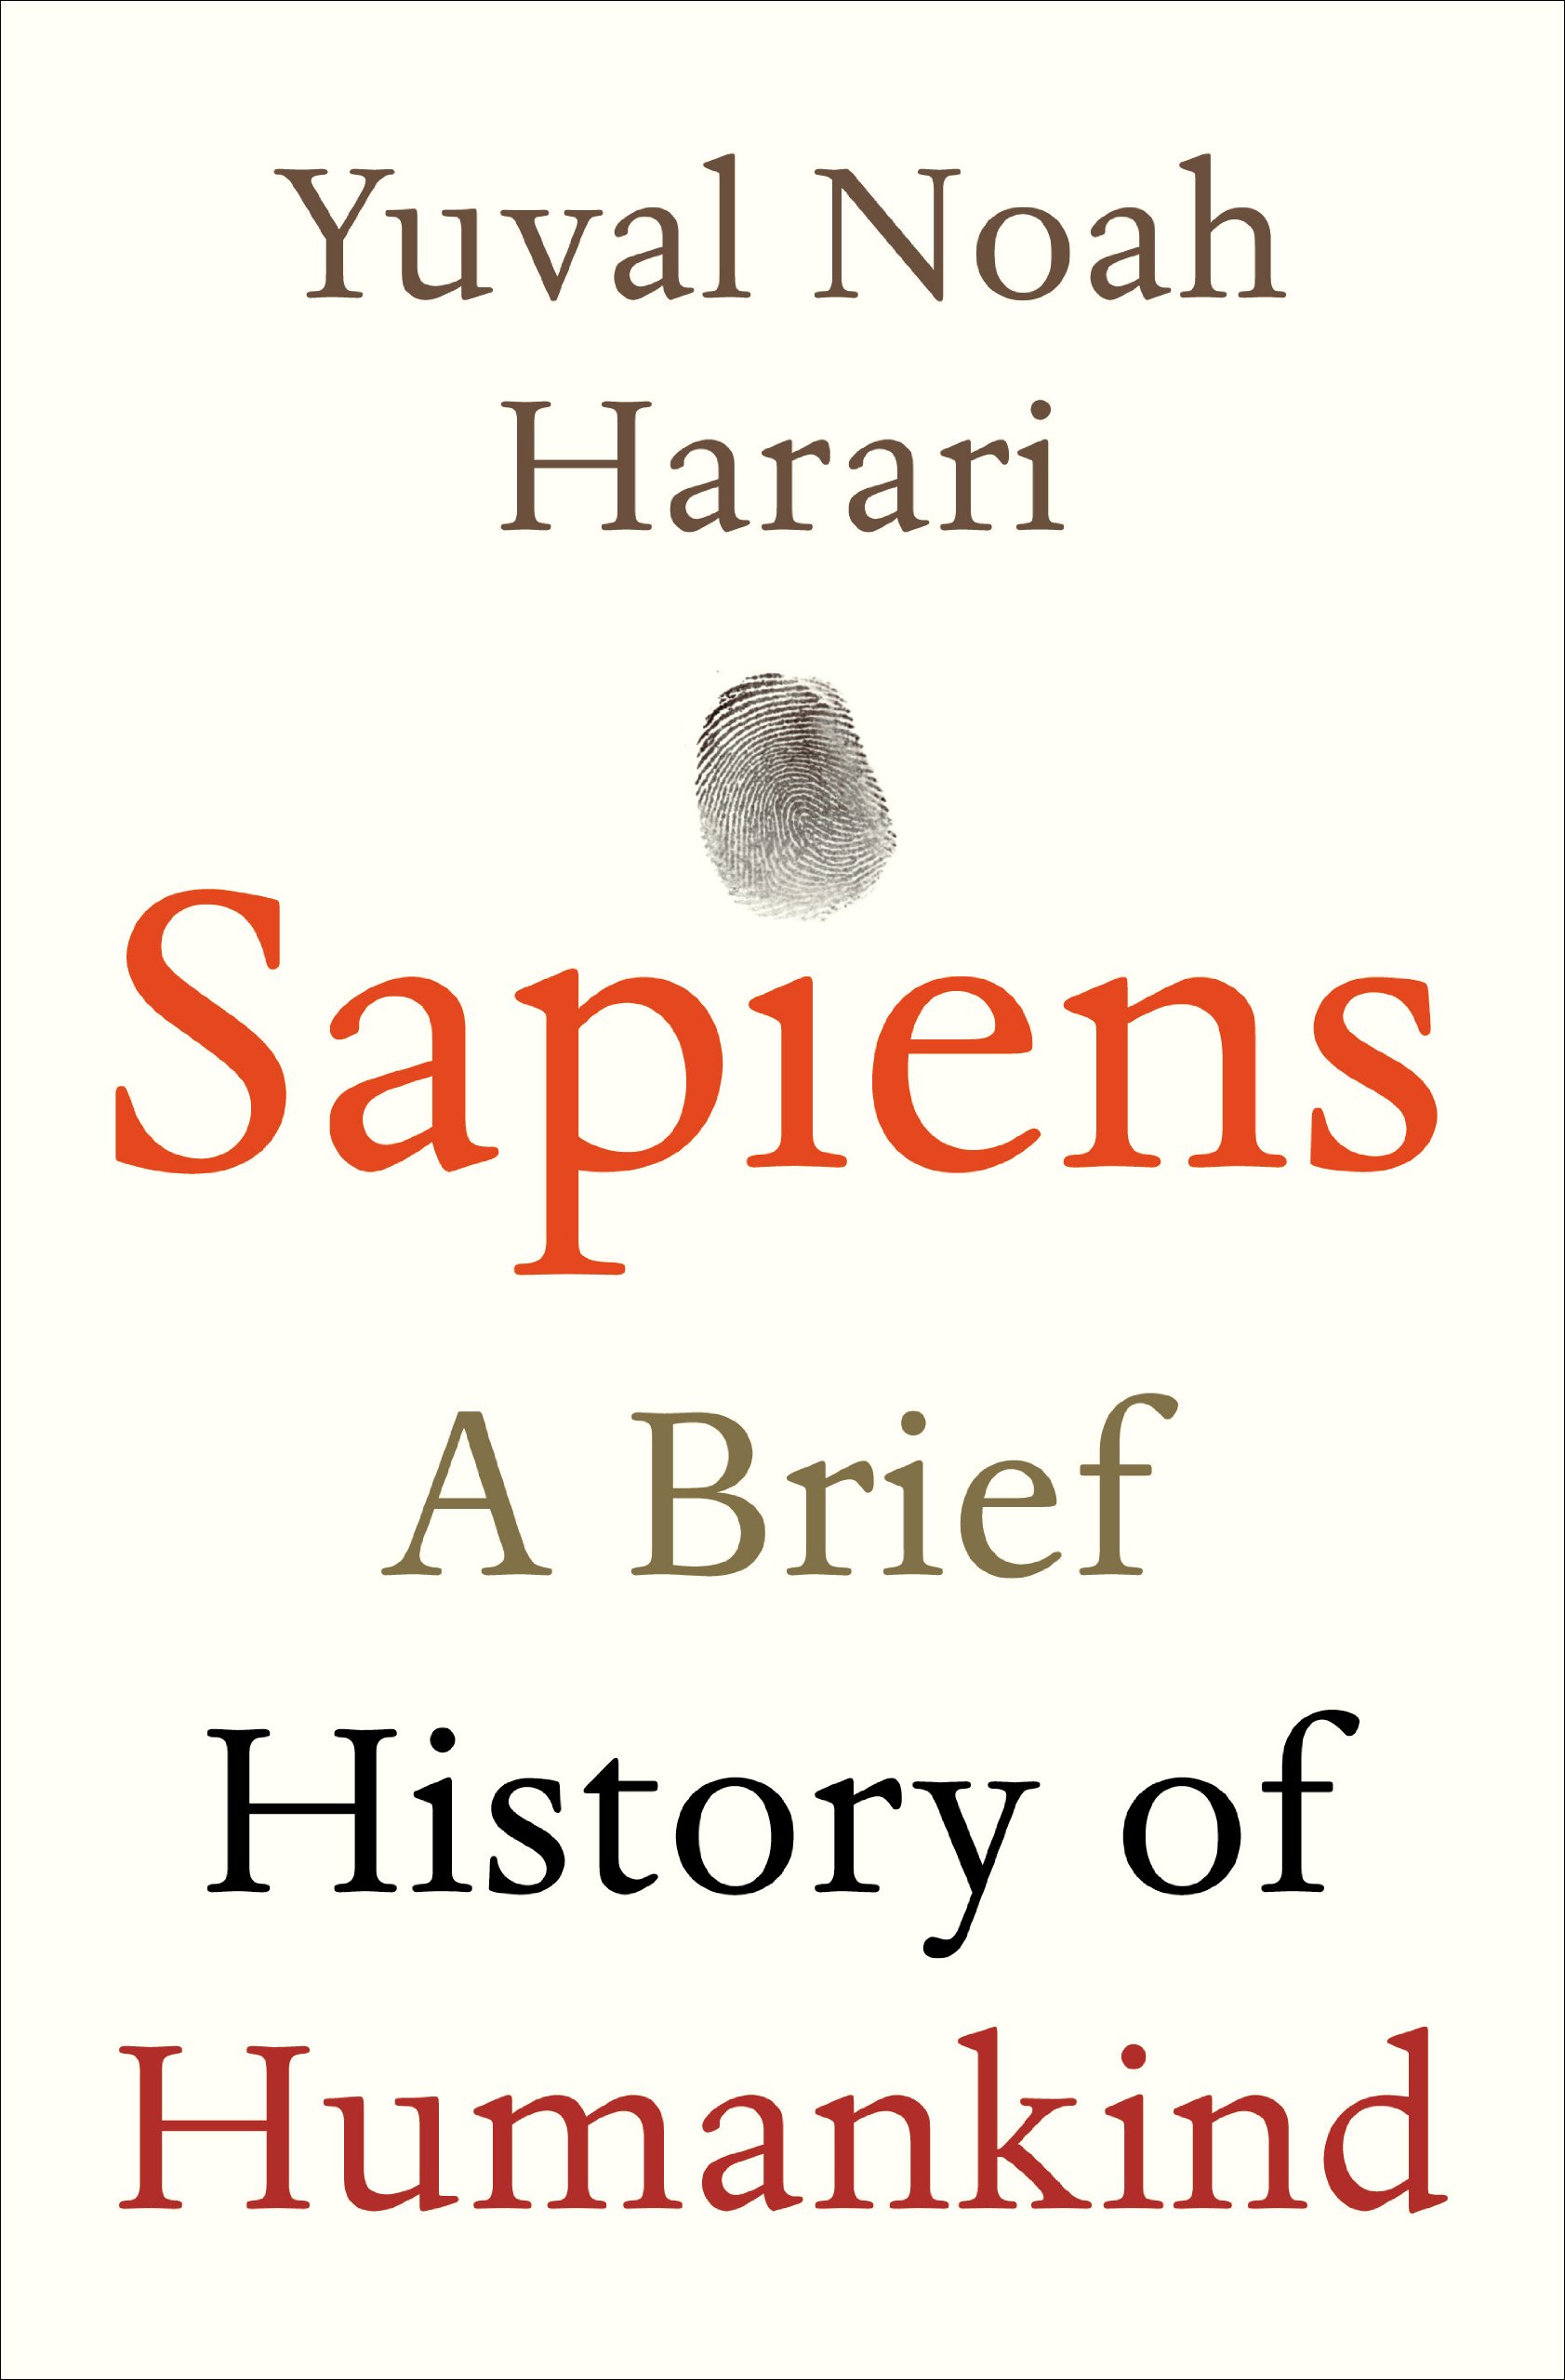 Cover image of Sapiens book by Yuval Noah Harari